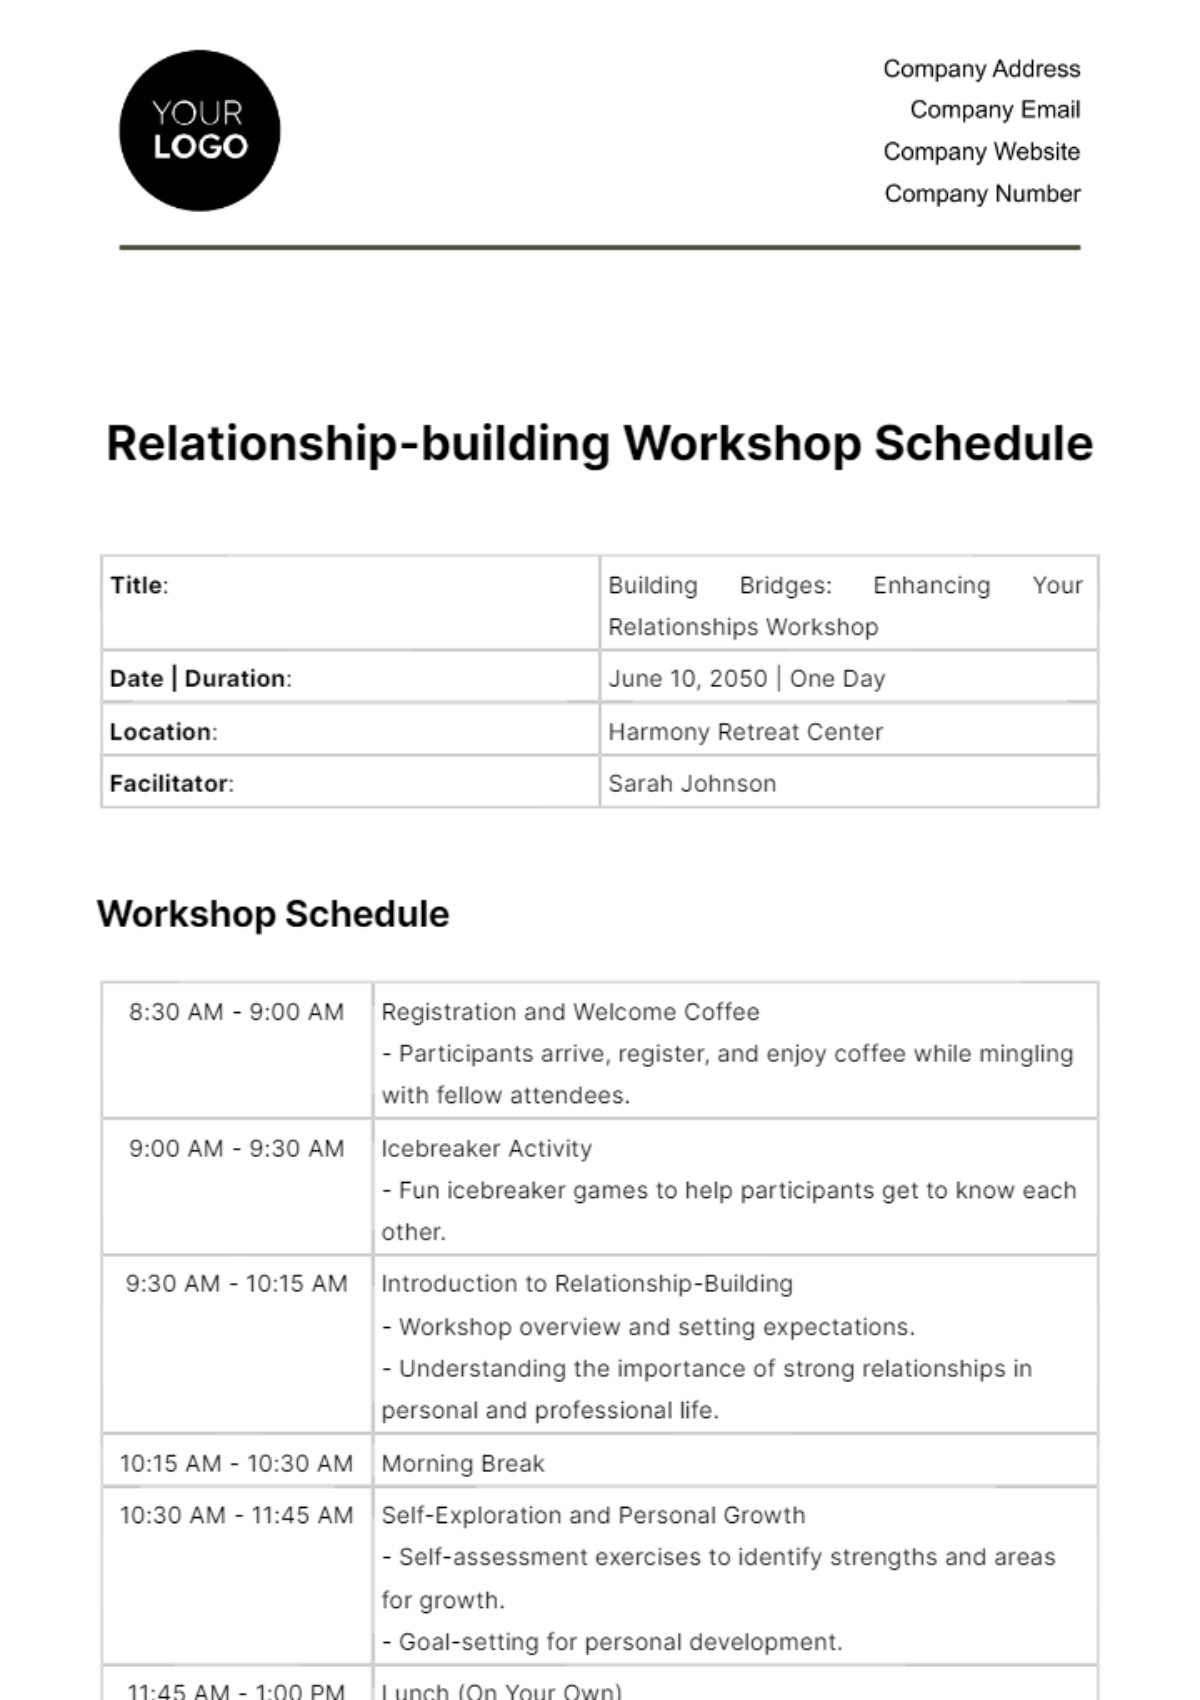 Free Relationship-building Workshop Schedule HR Template